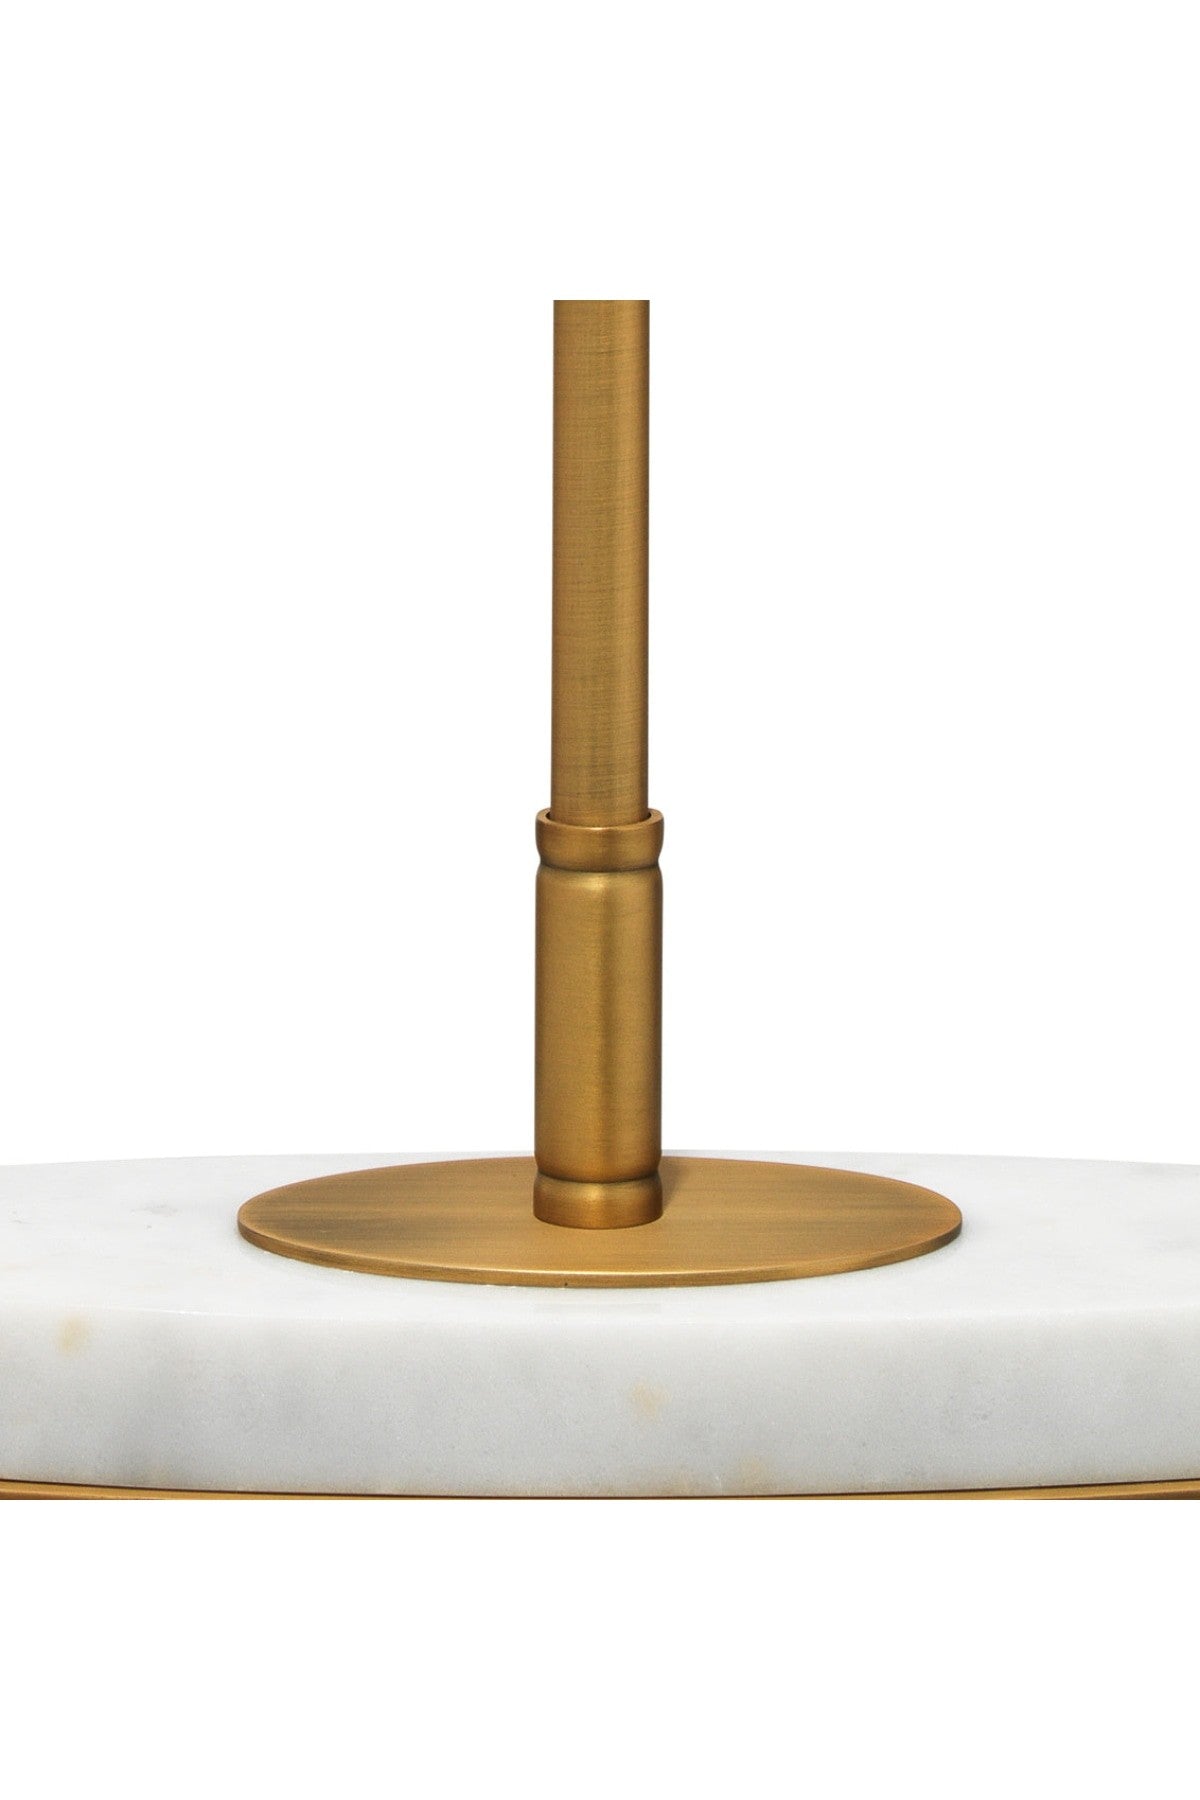 Ashcroft Table Lamp